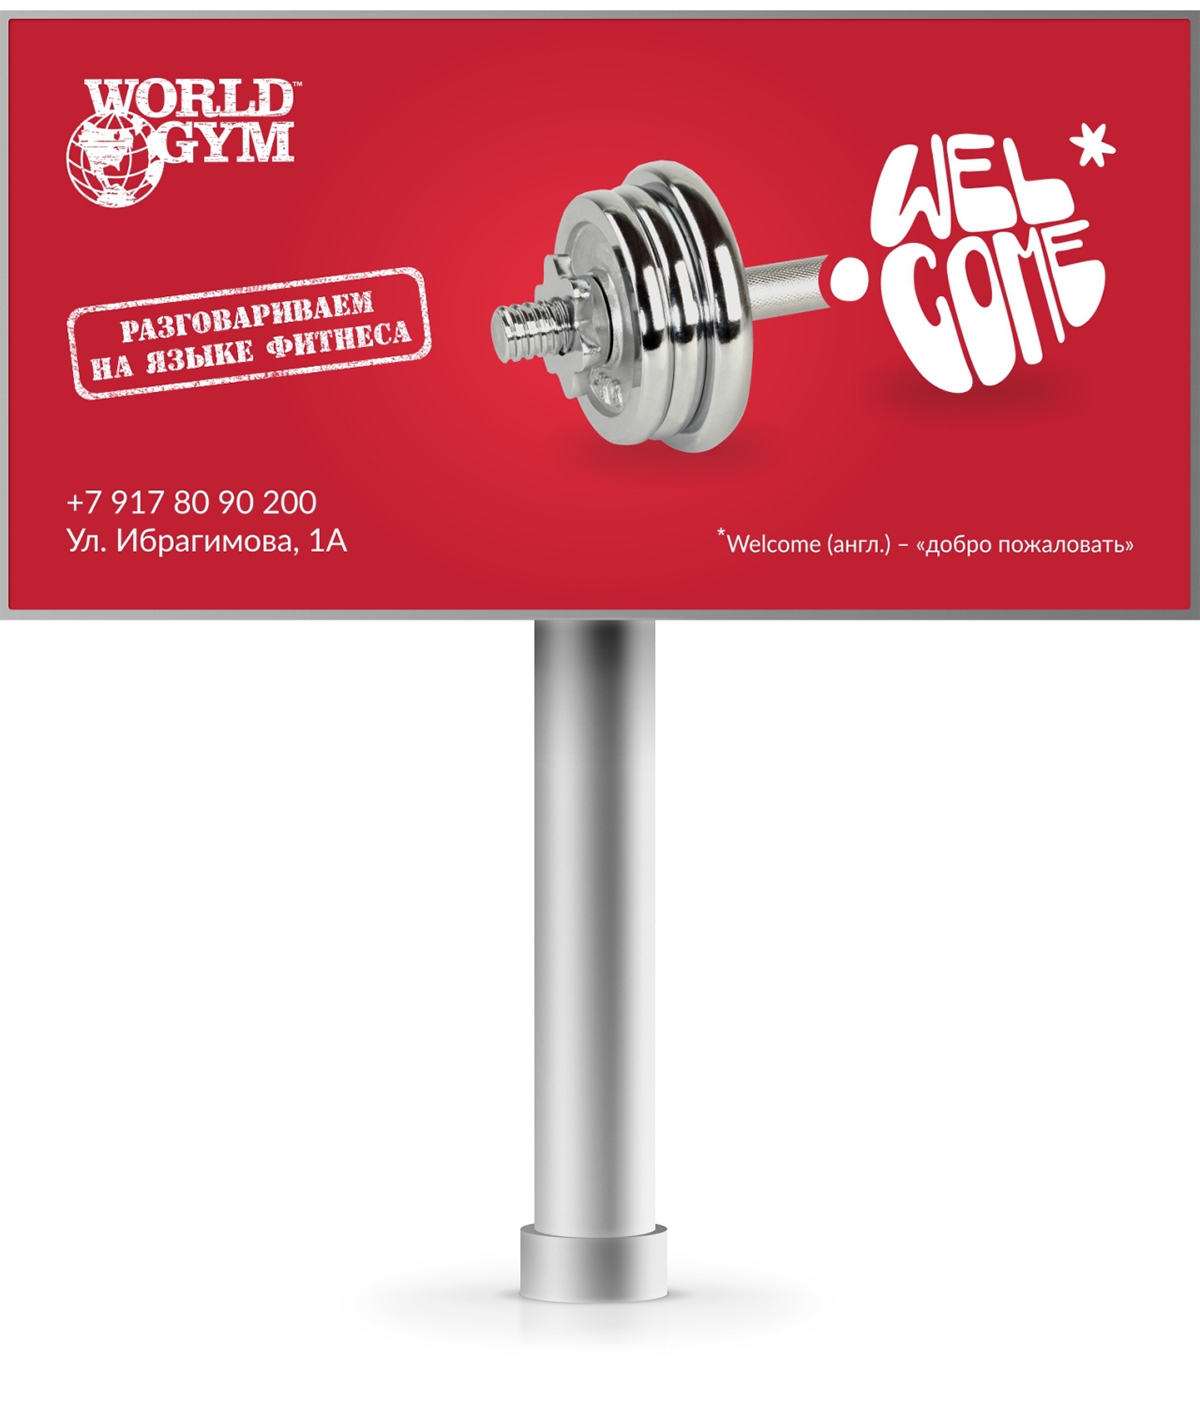 World Gym Sterlitamak dumbbell weight billboard wg fitness